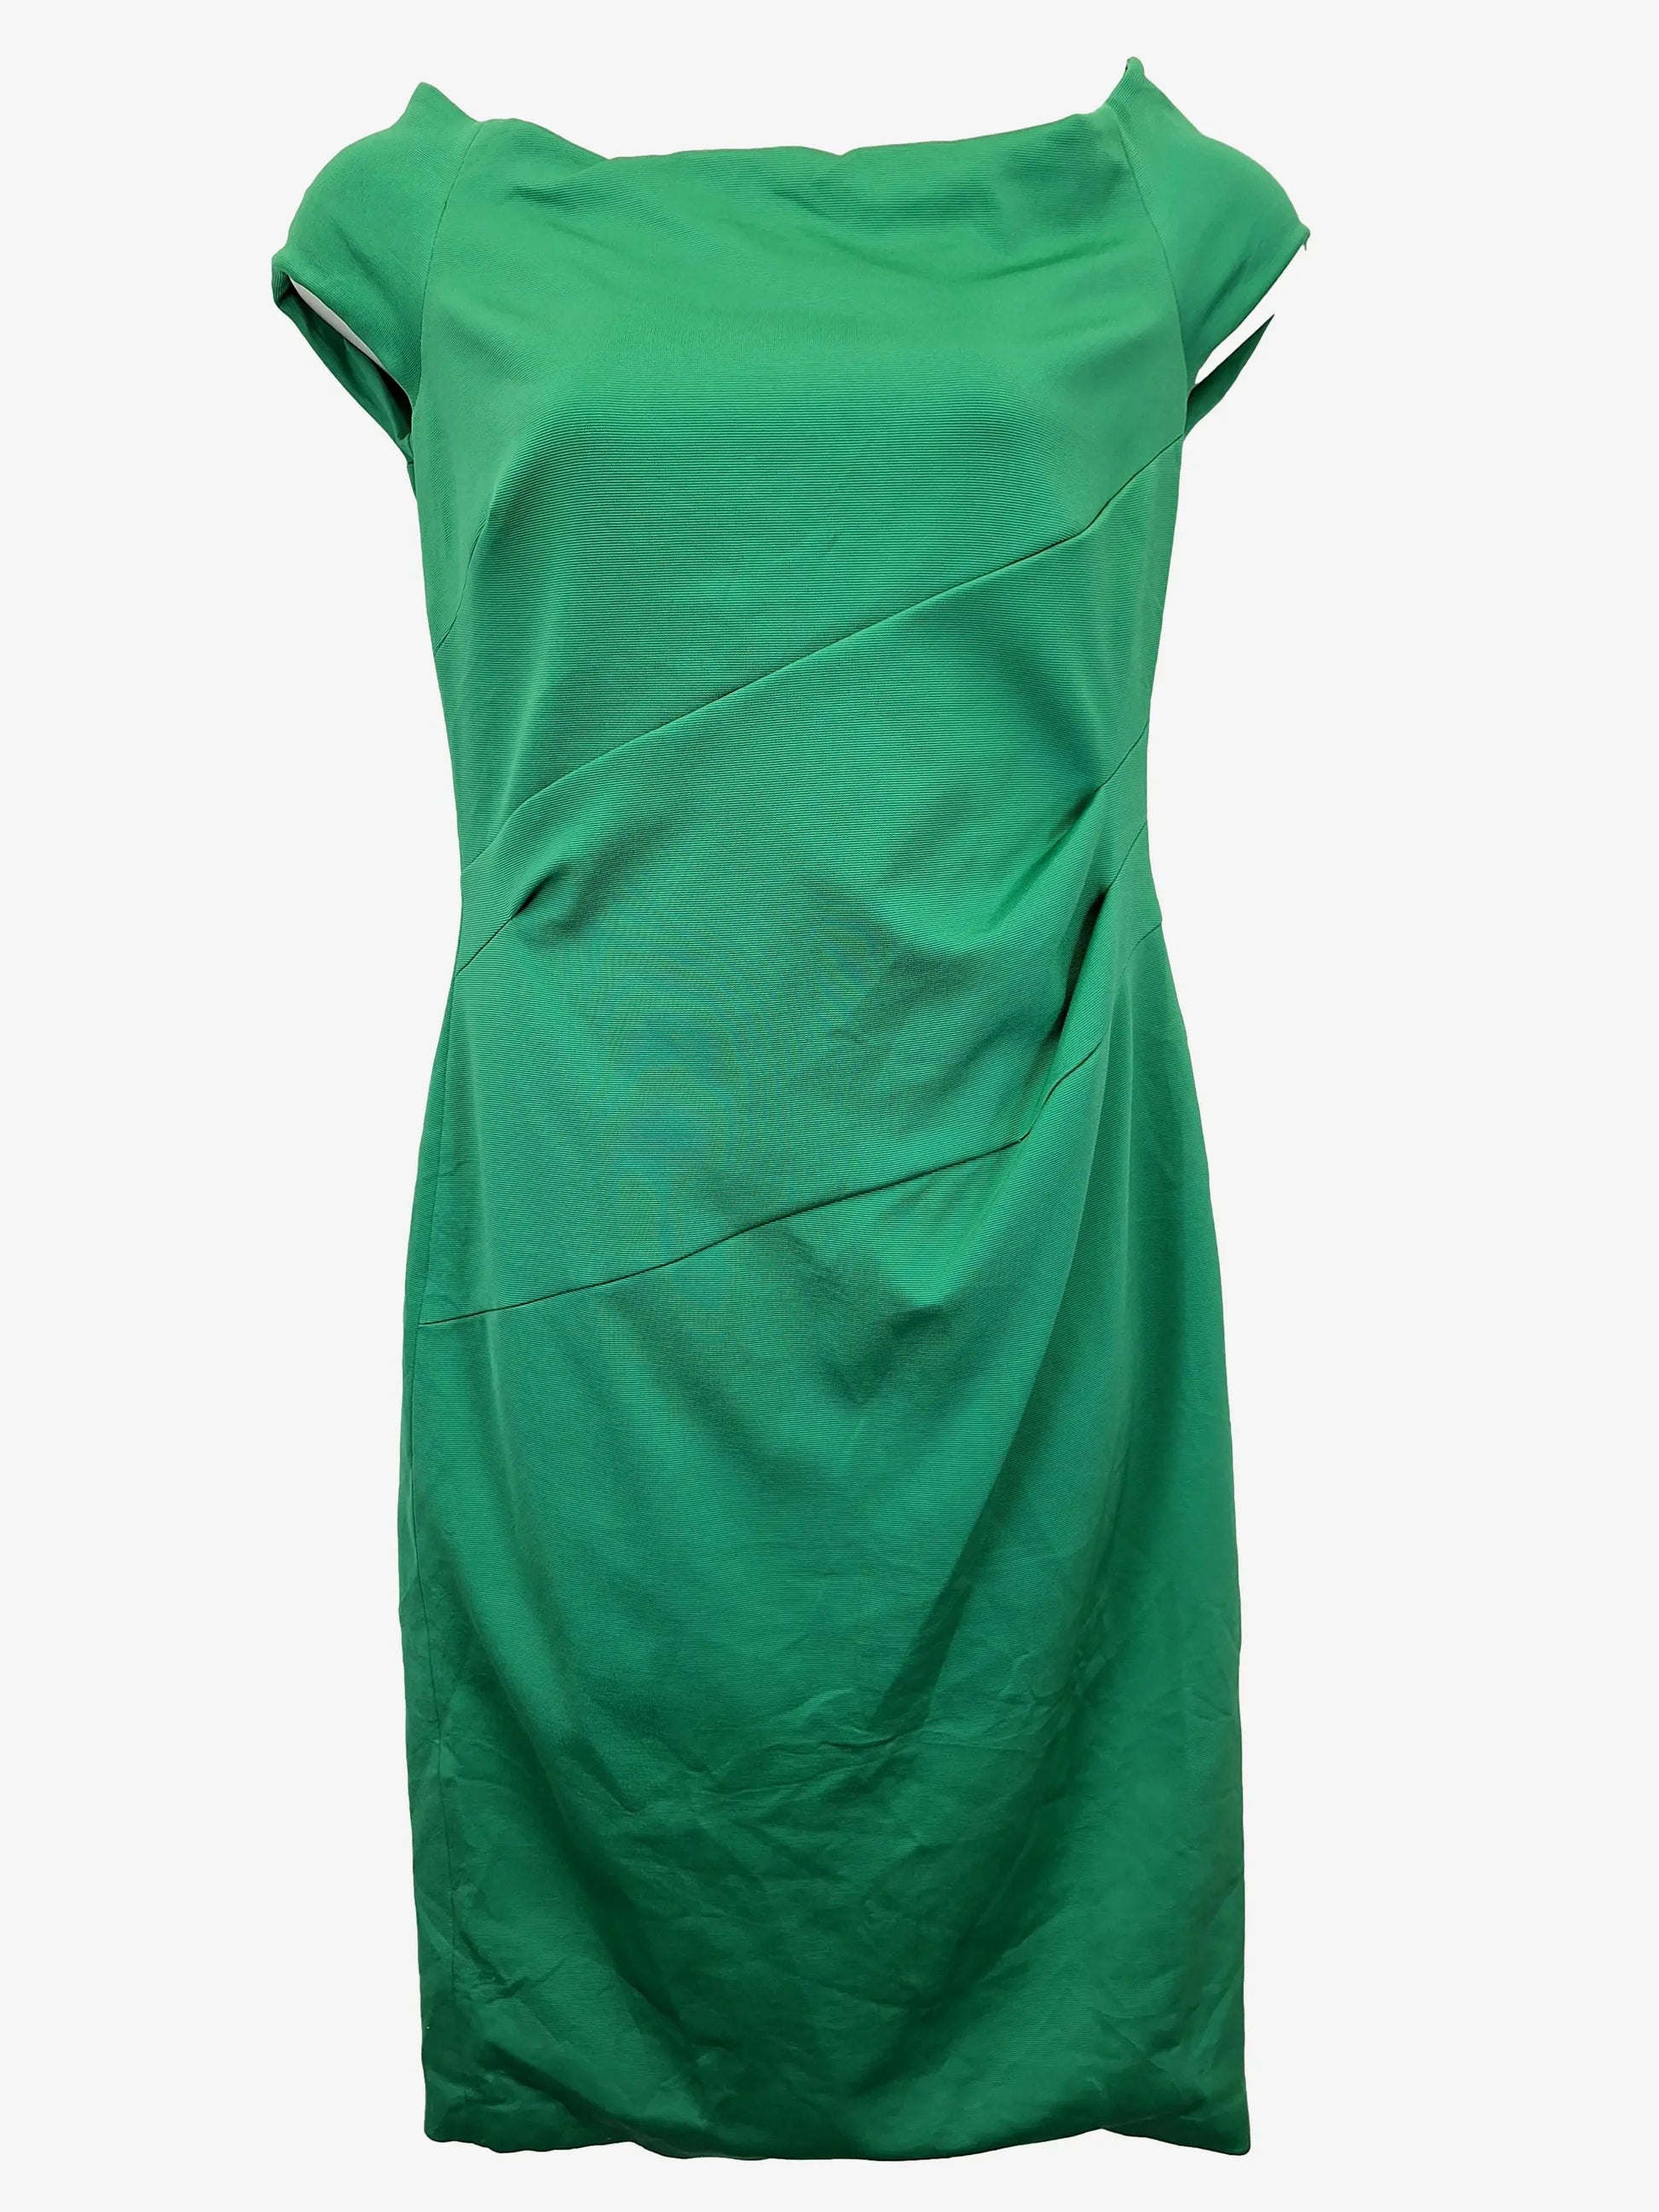 Karen Millen Green Work Shift Midi Dress Size 16 by SwapUp-Online Second Hand Store-Online Thrift Store